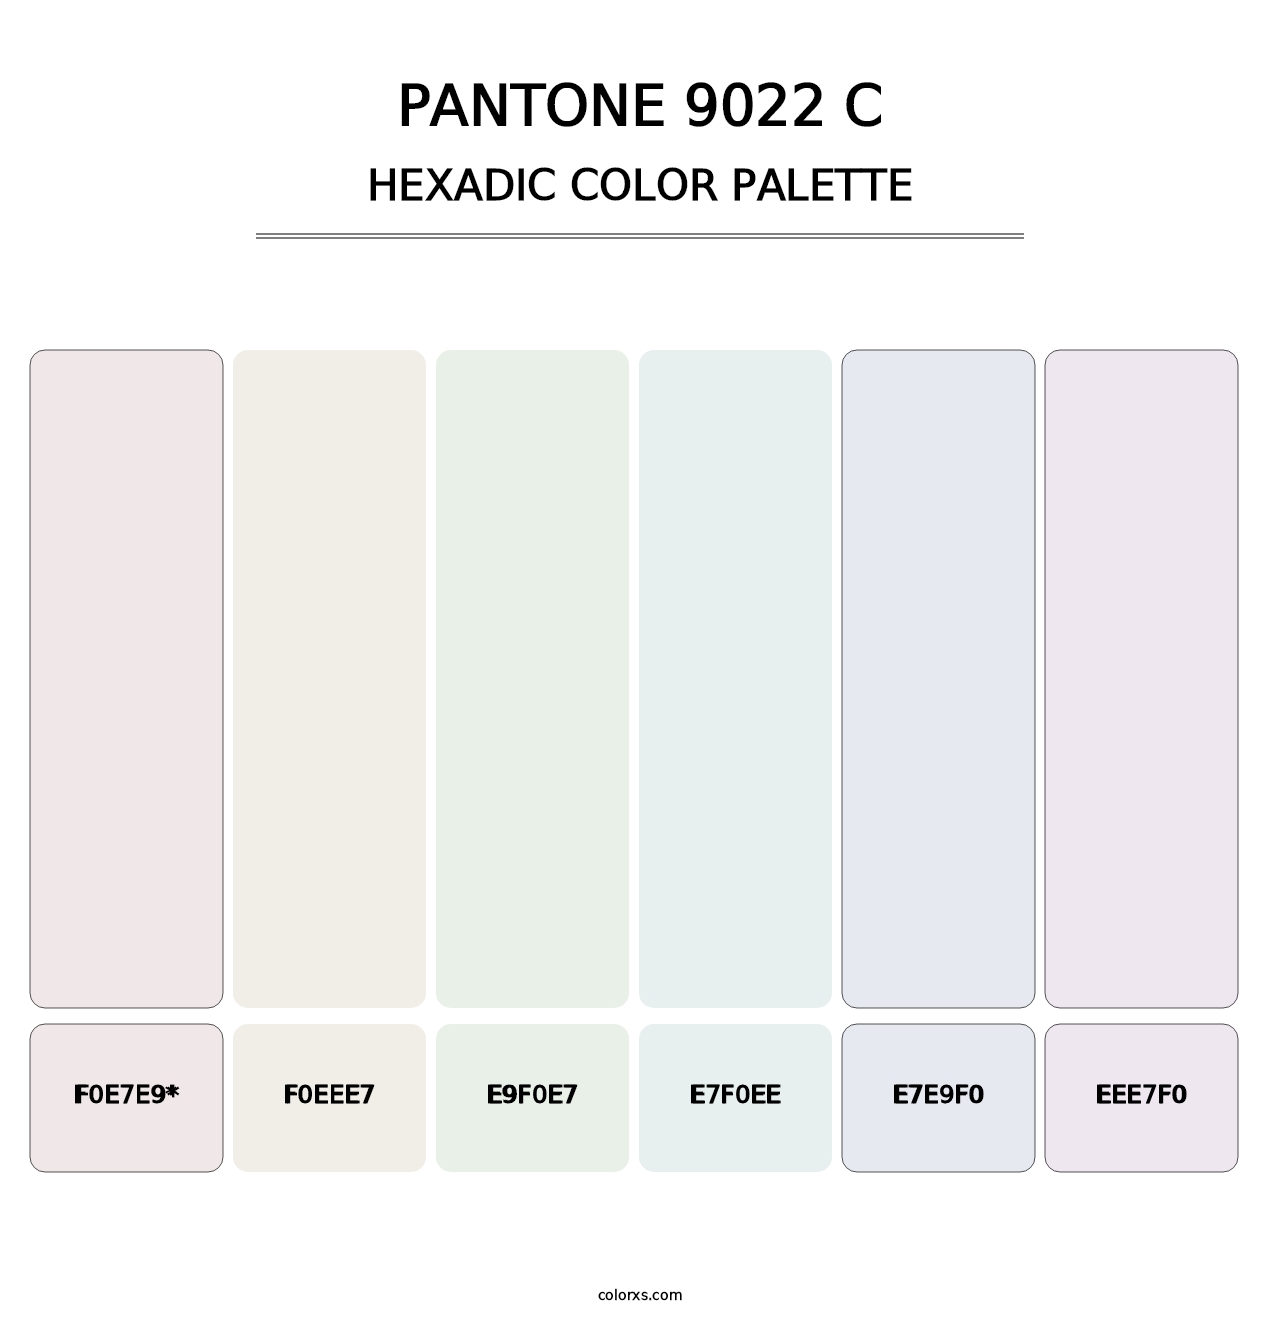 PANTONE 9022 C - Hexadic Color Palette